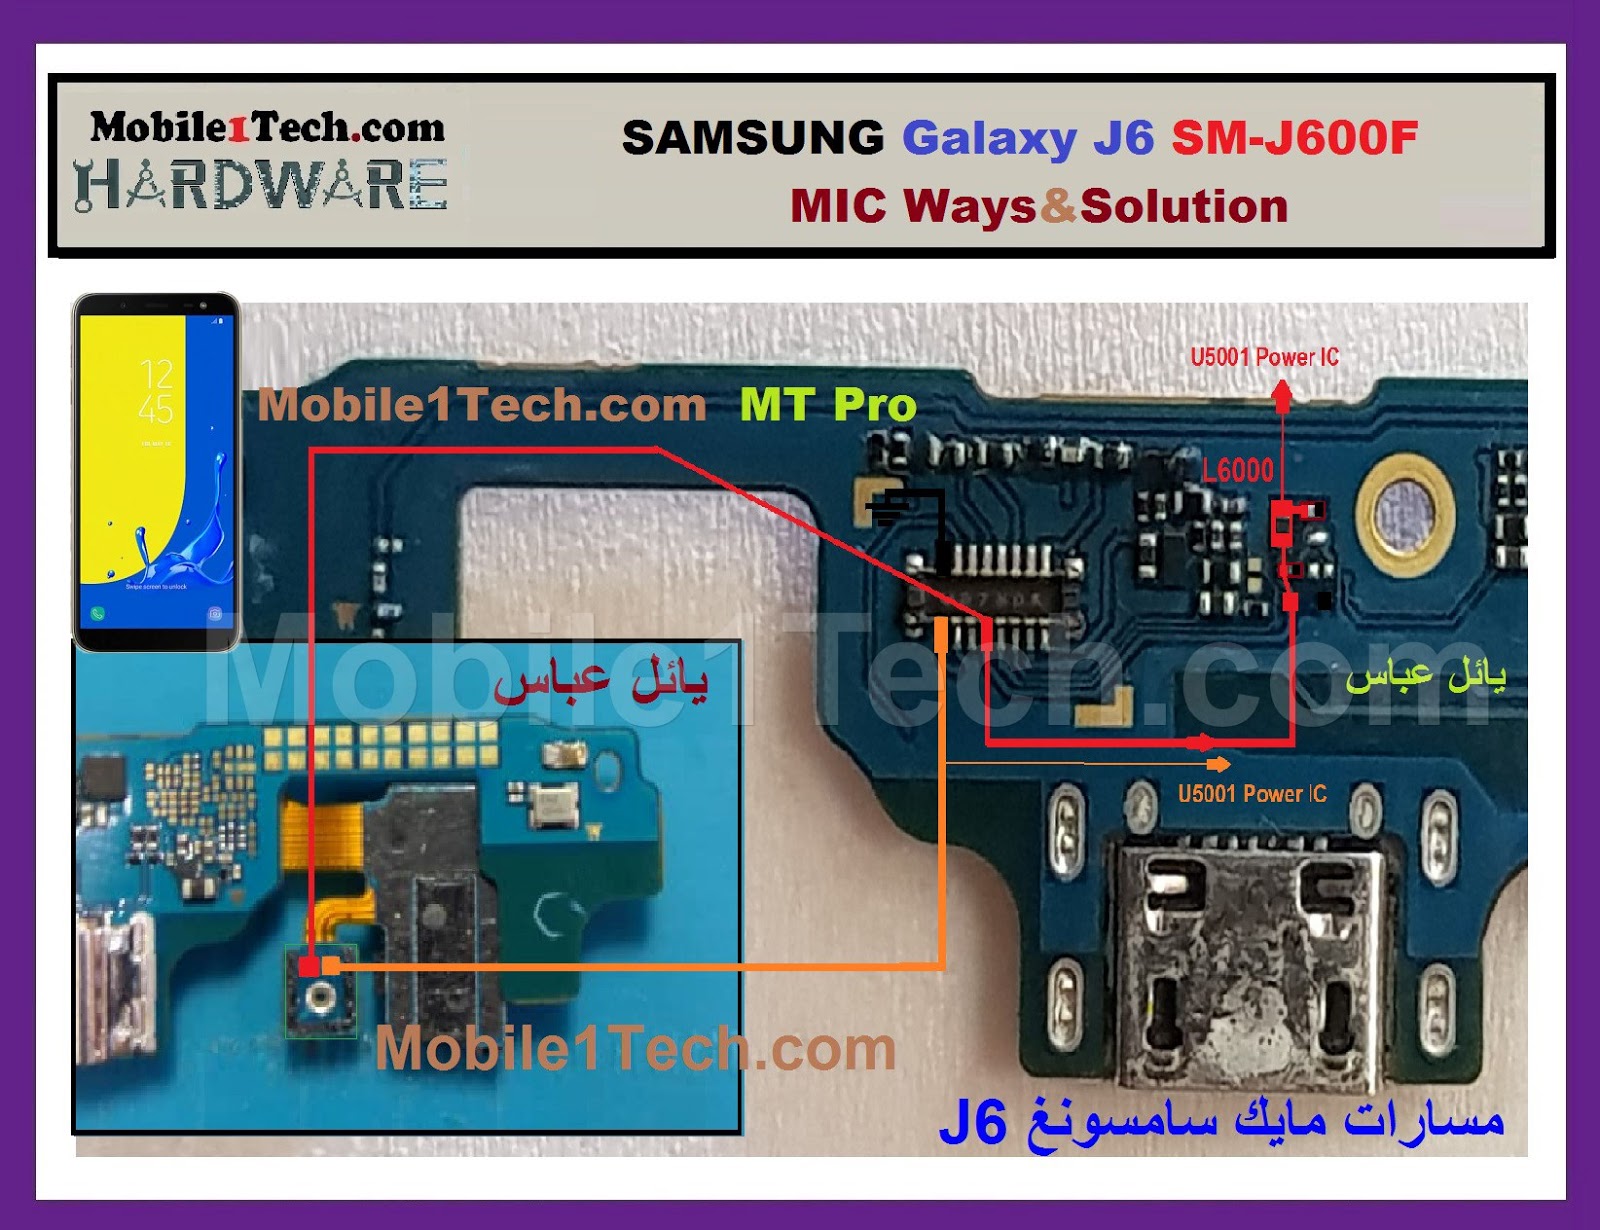 Samsung Sm J600f Mic Ways